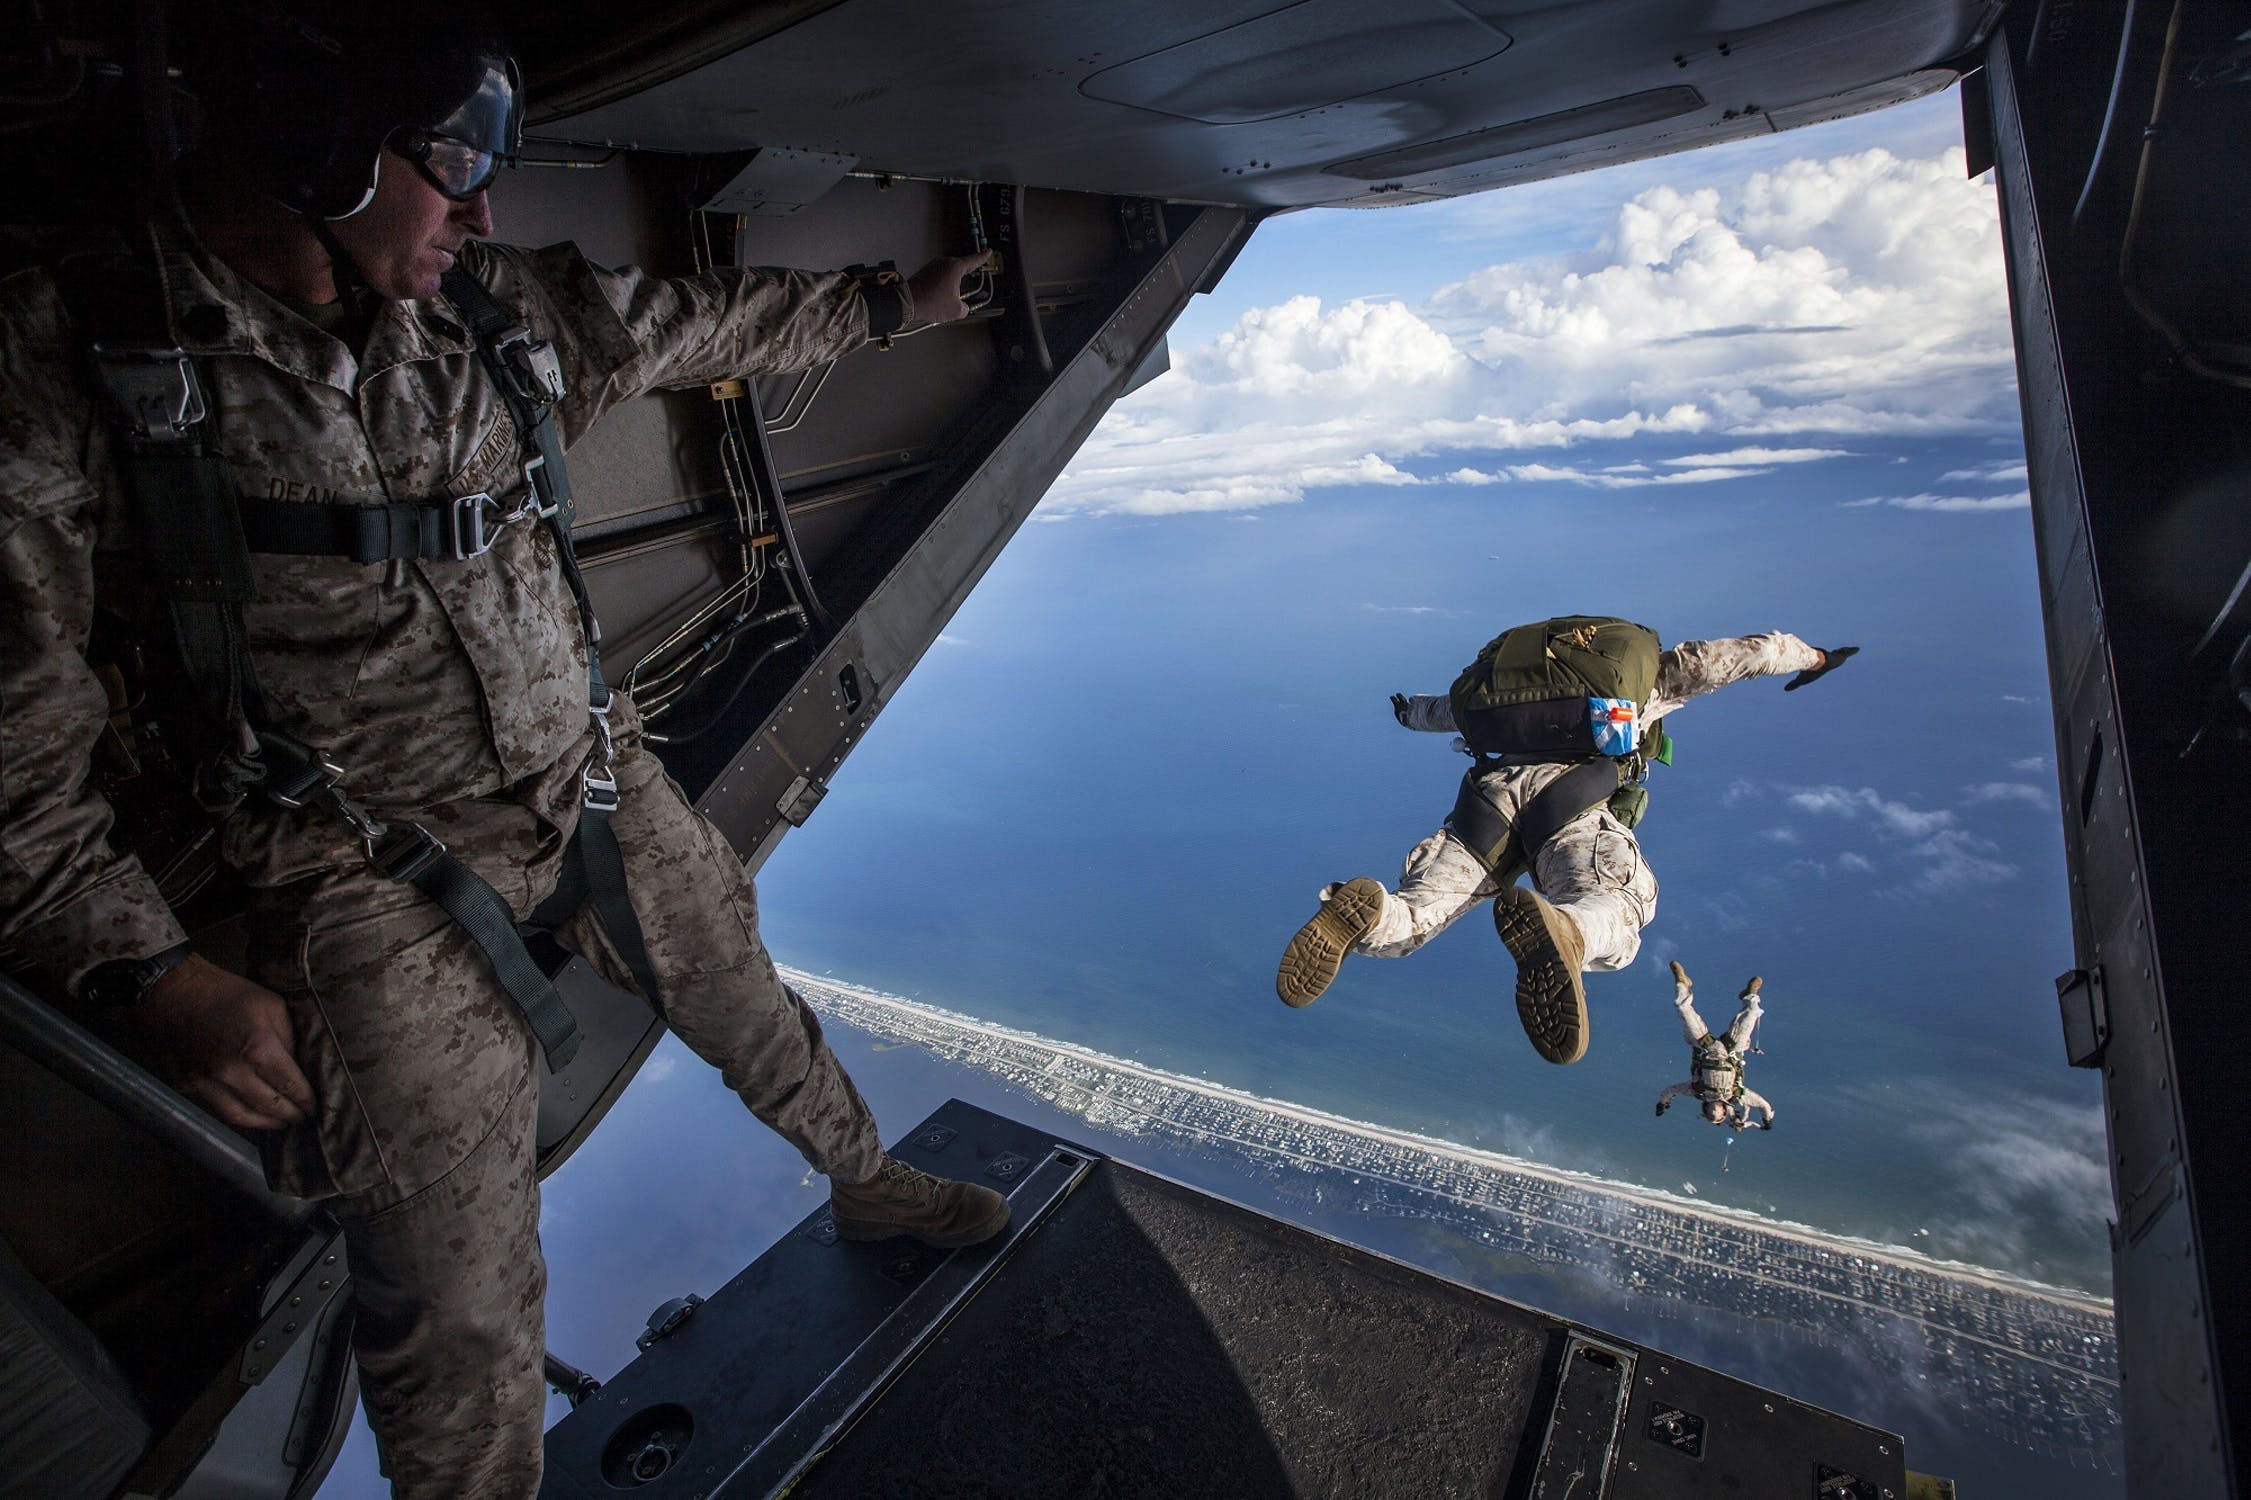 Parachute jump | Source: Pexels